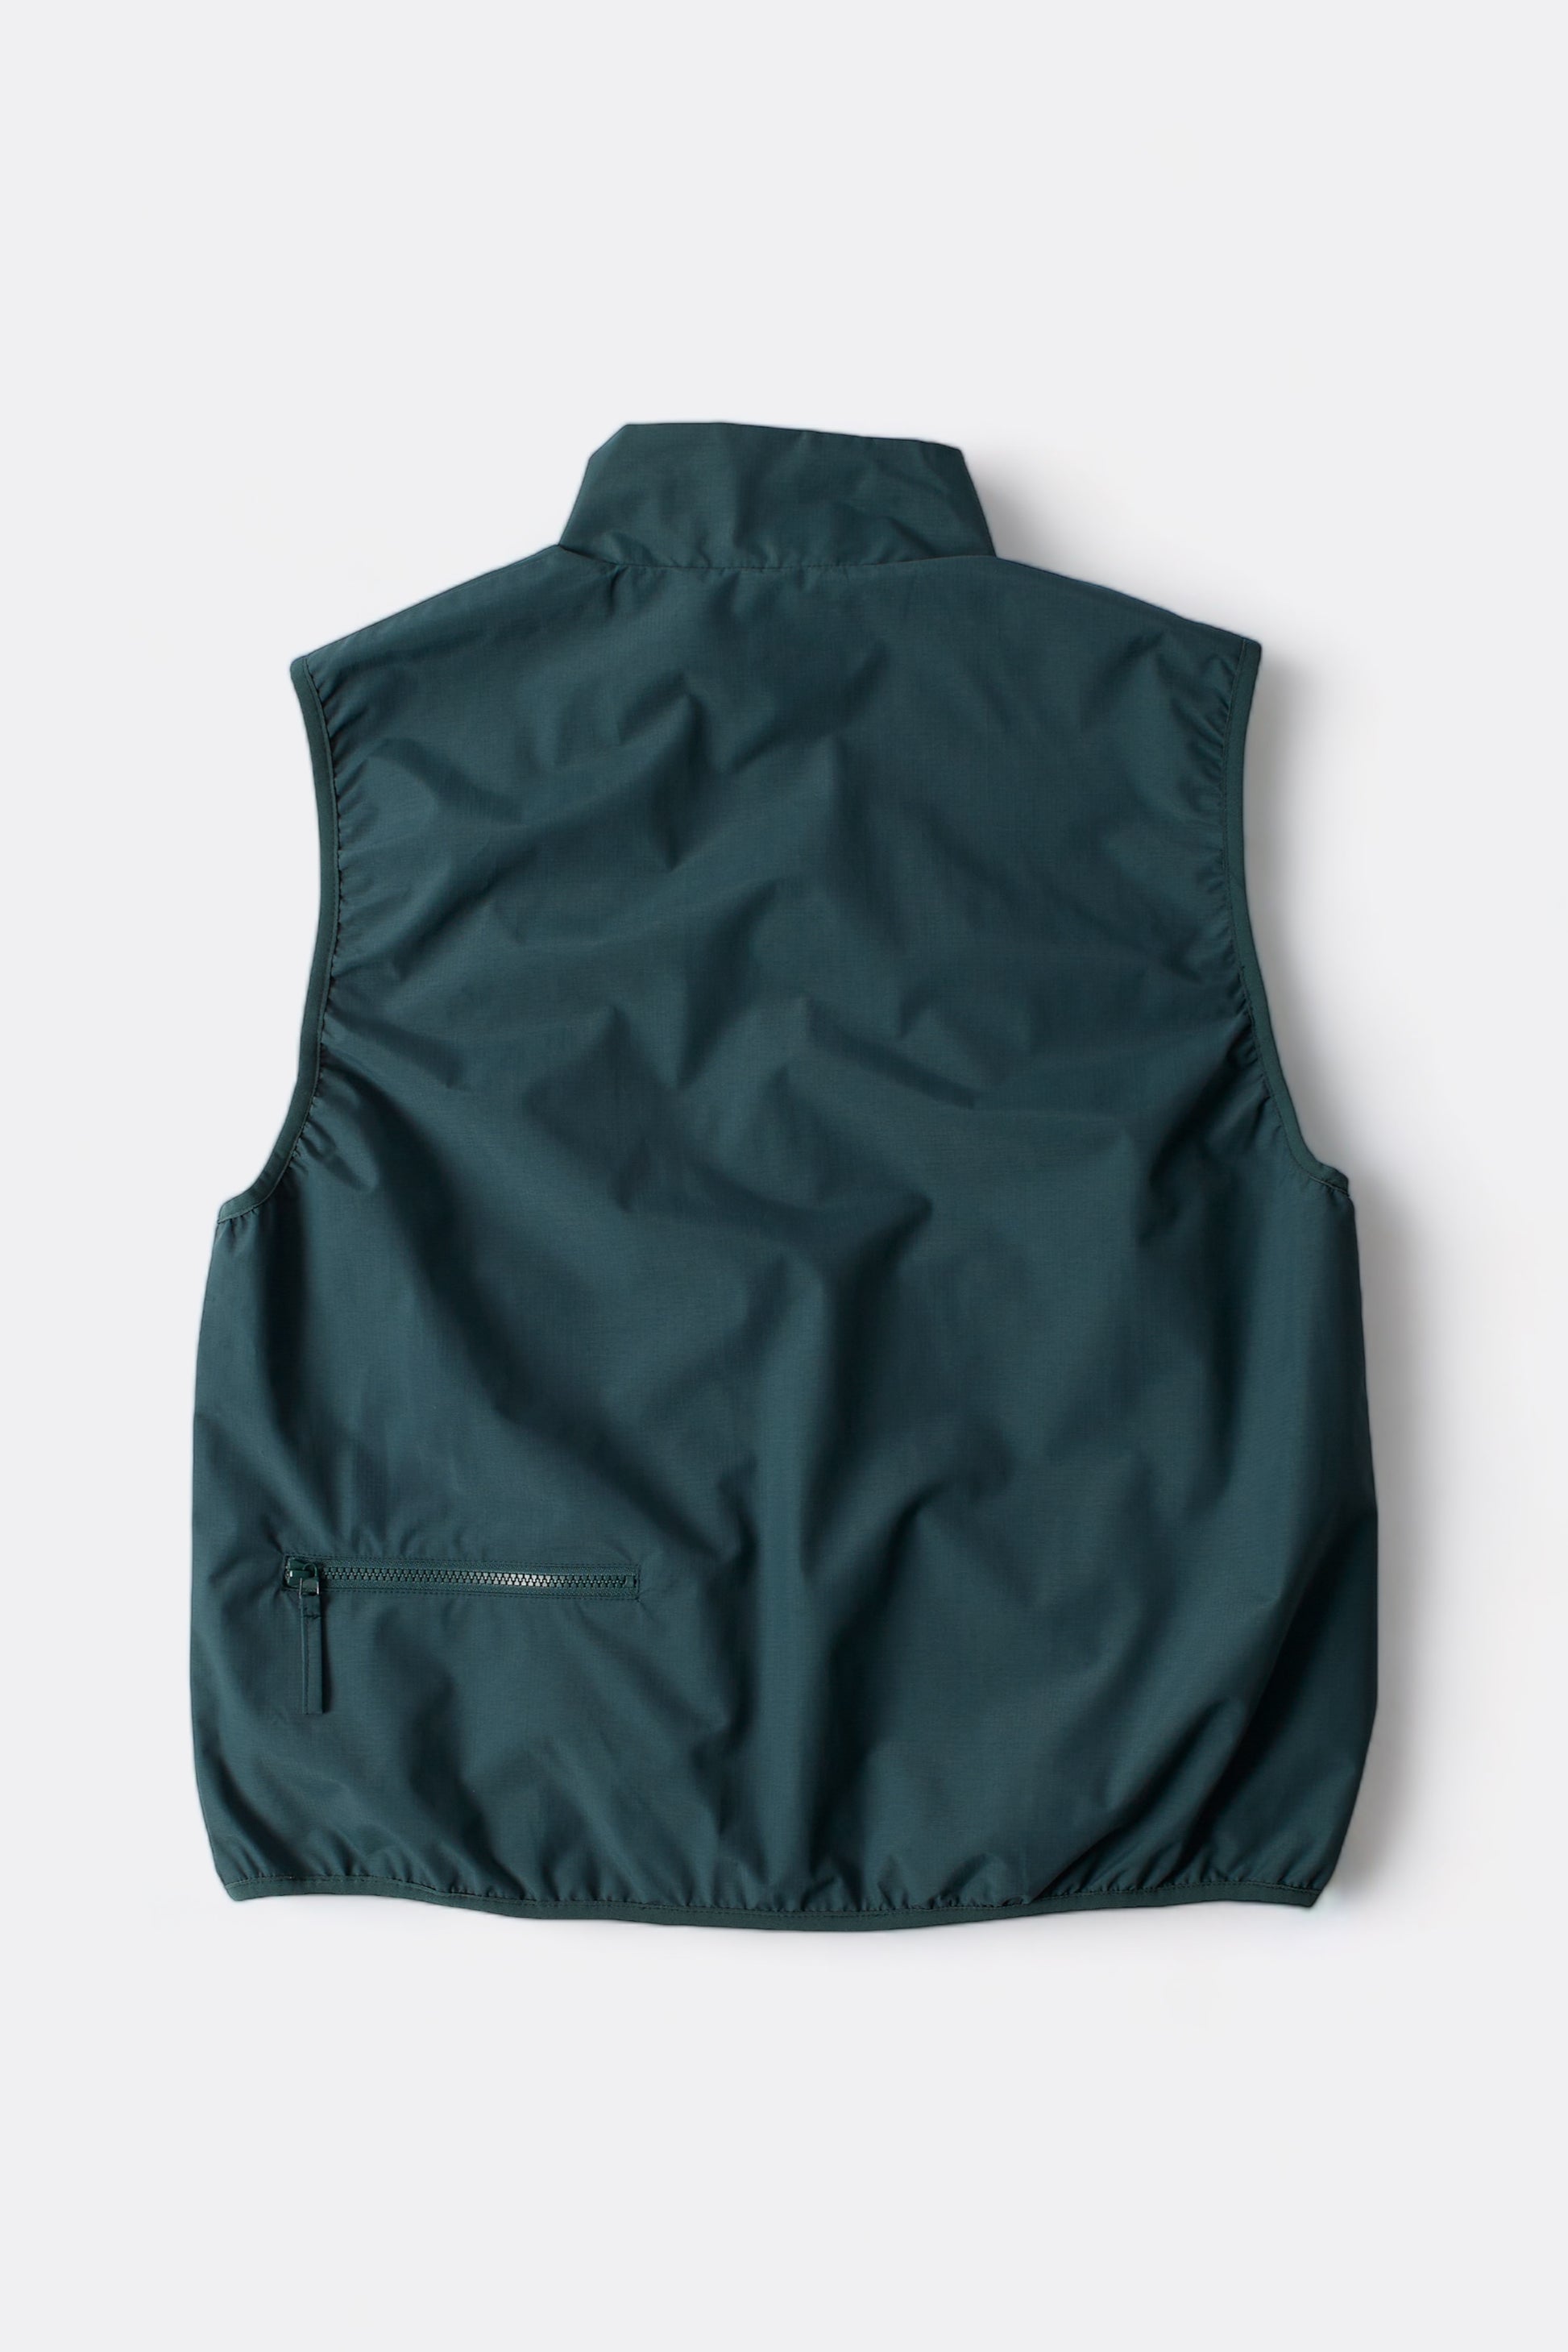 Parra - Ghost Cave Reversible Vest (Green)